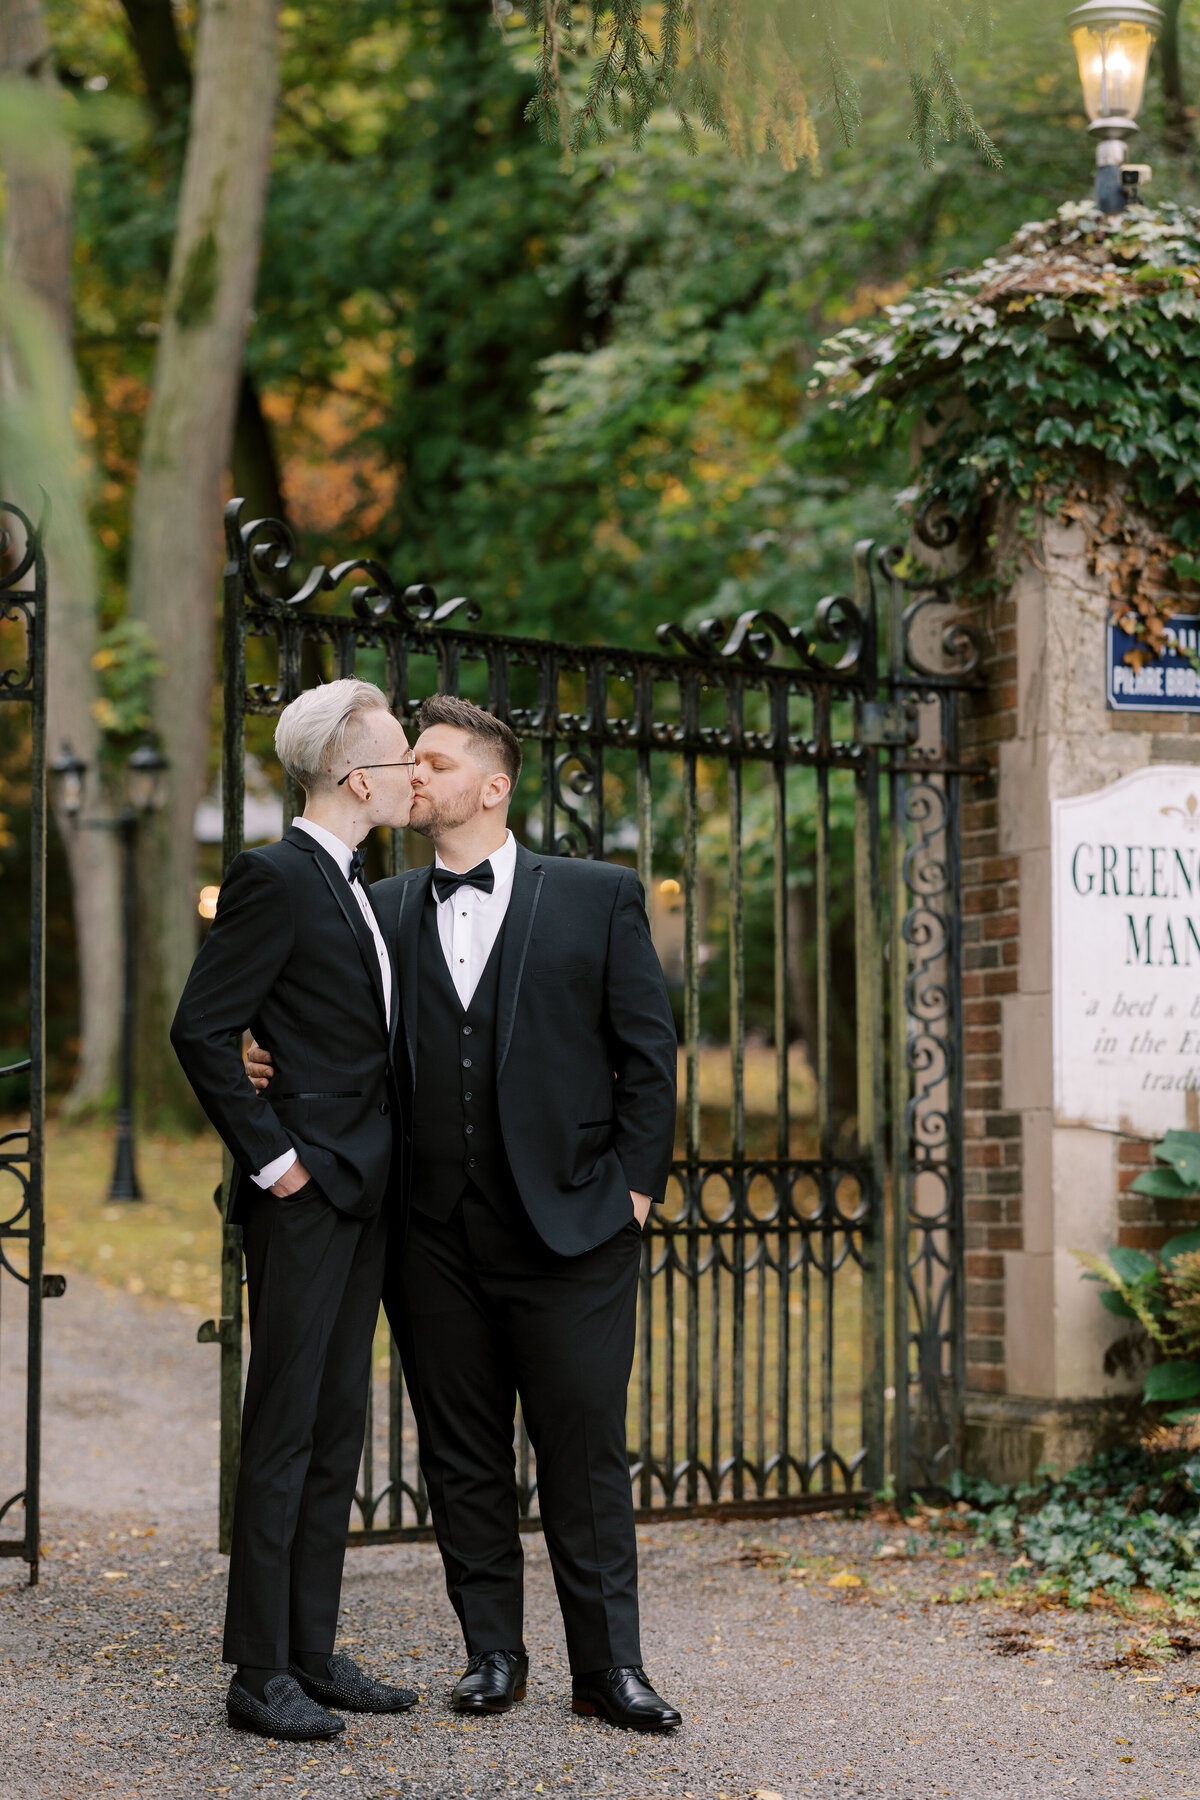 Greencrest-Manor-wedding-inspiration-6